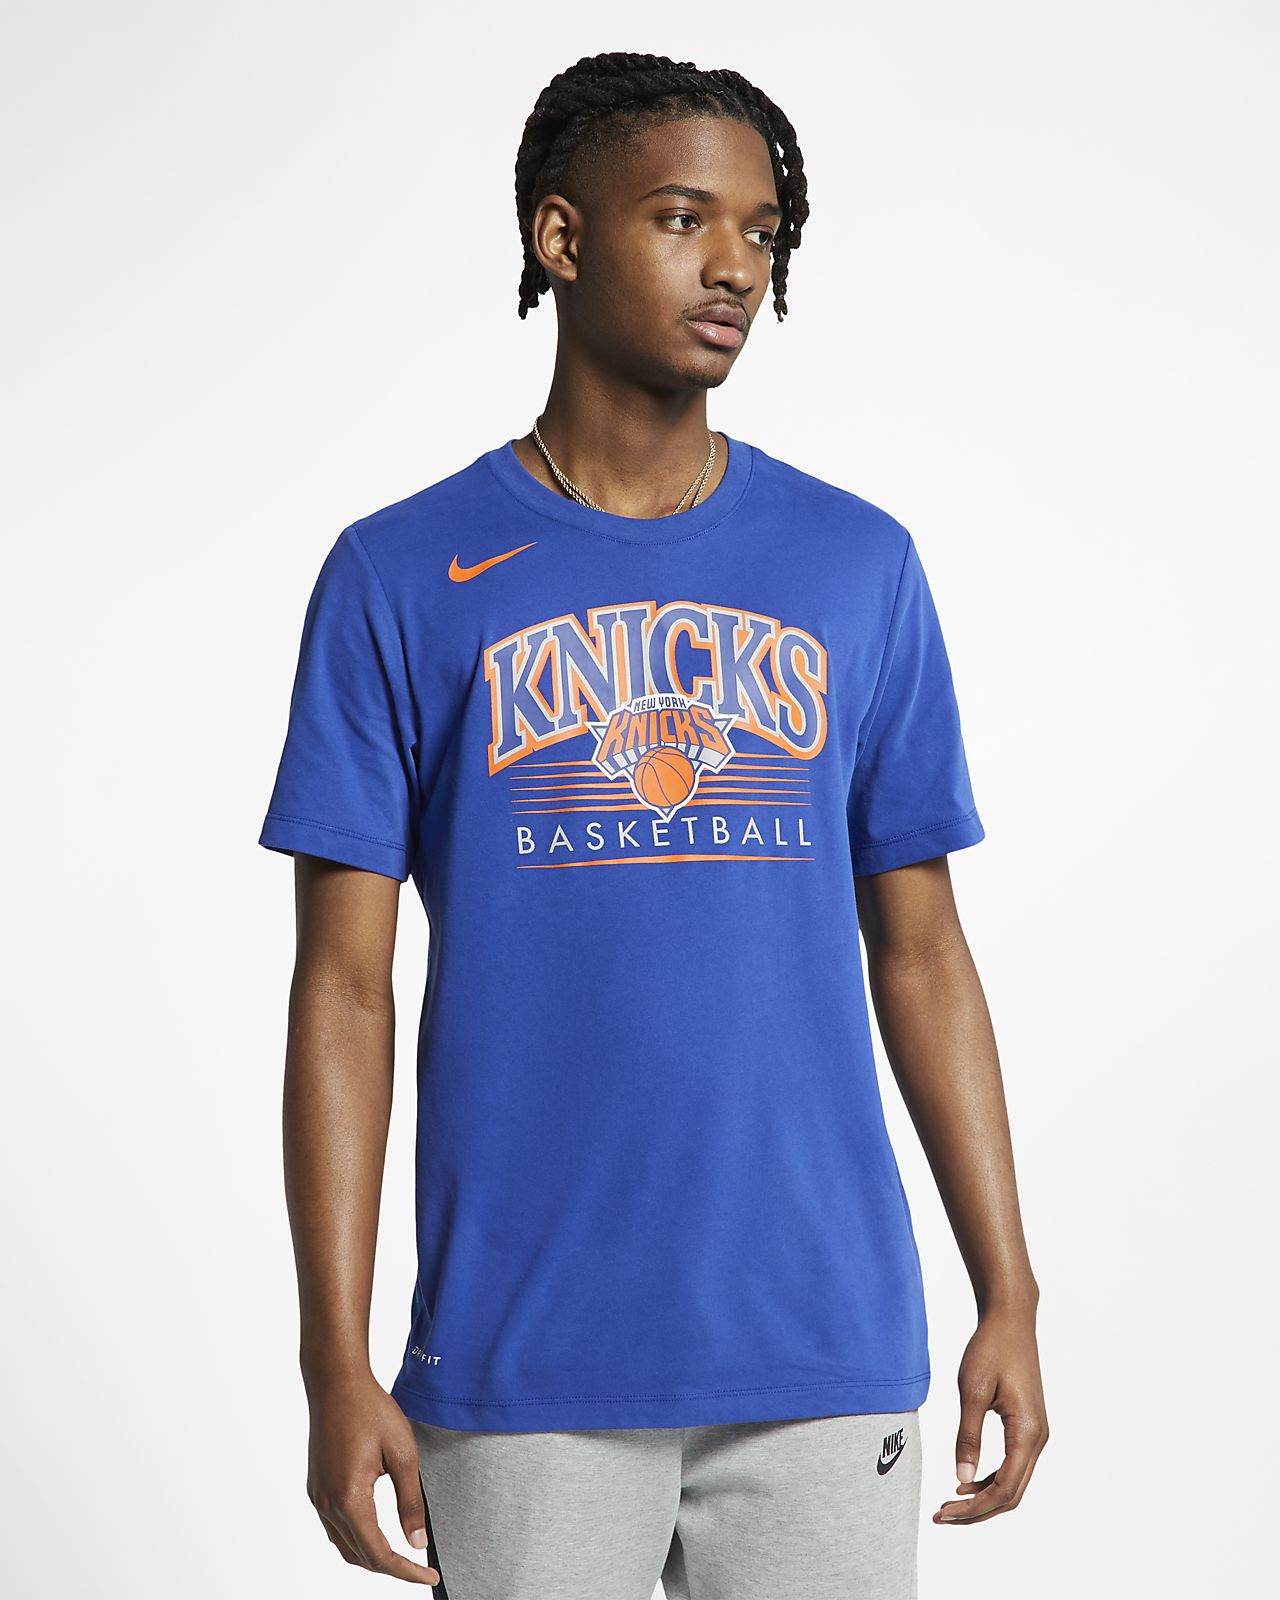 new york knicks basketball shirt